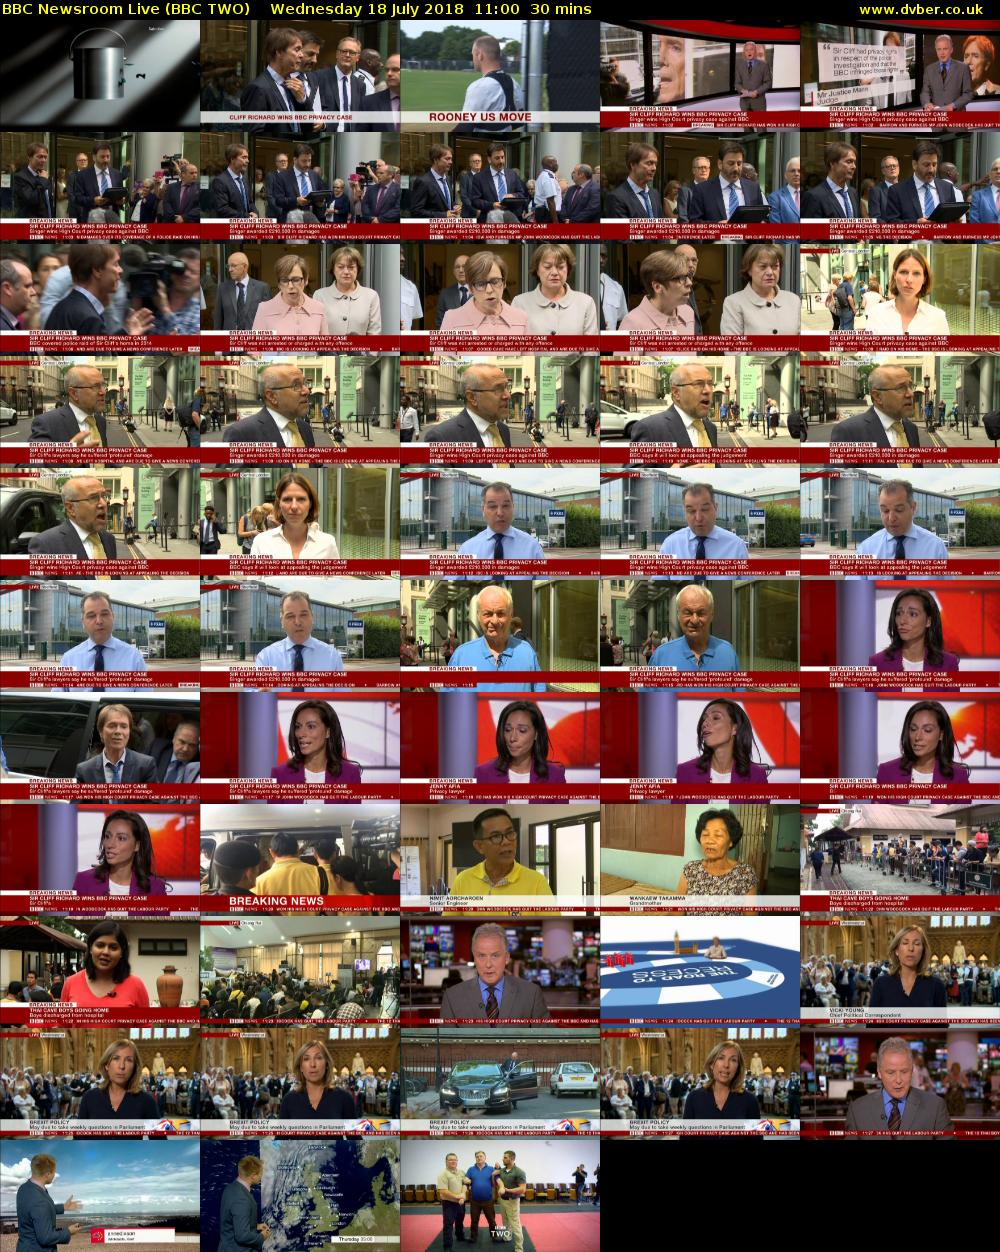 BBC Newsroom Live (BBC TWO) Wednesday 18 July 2018 11:00 - 11:30